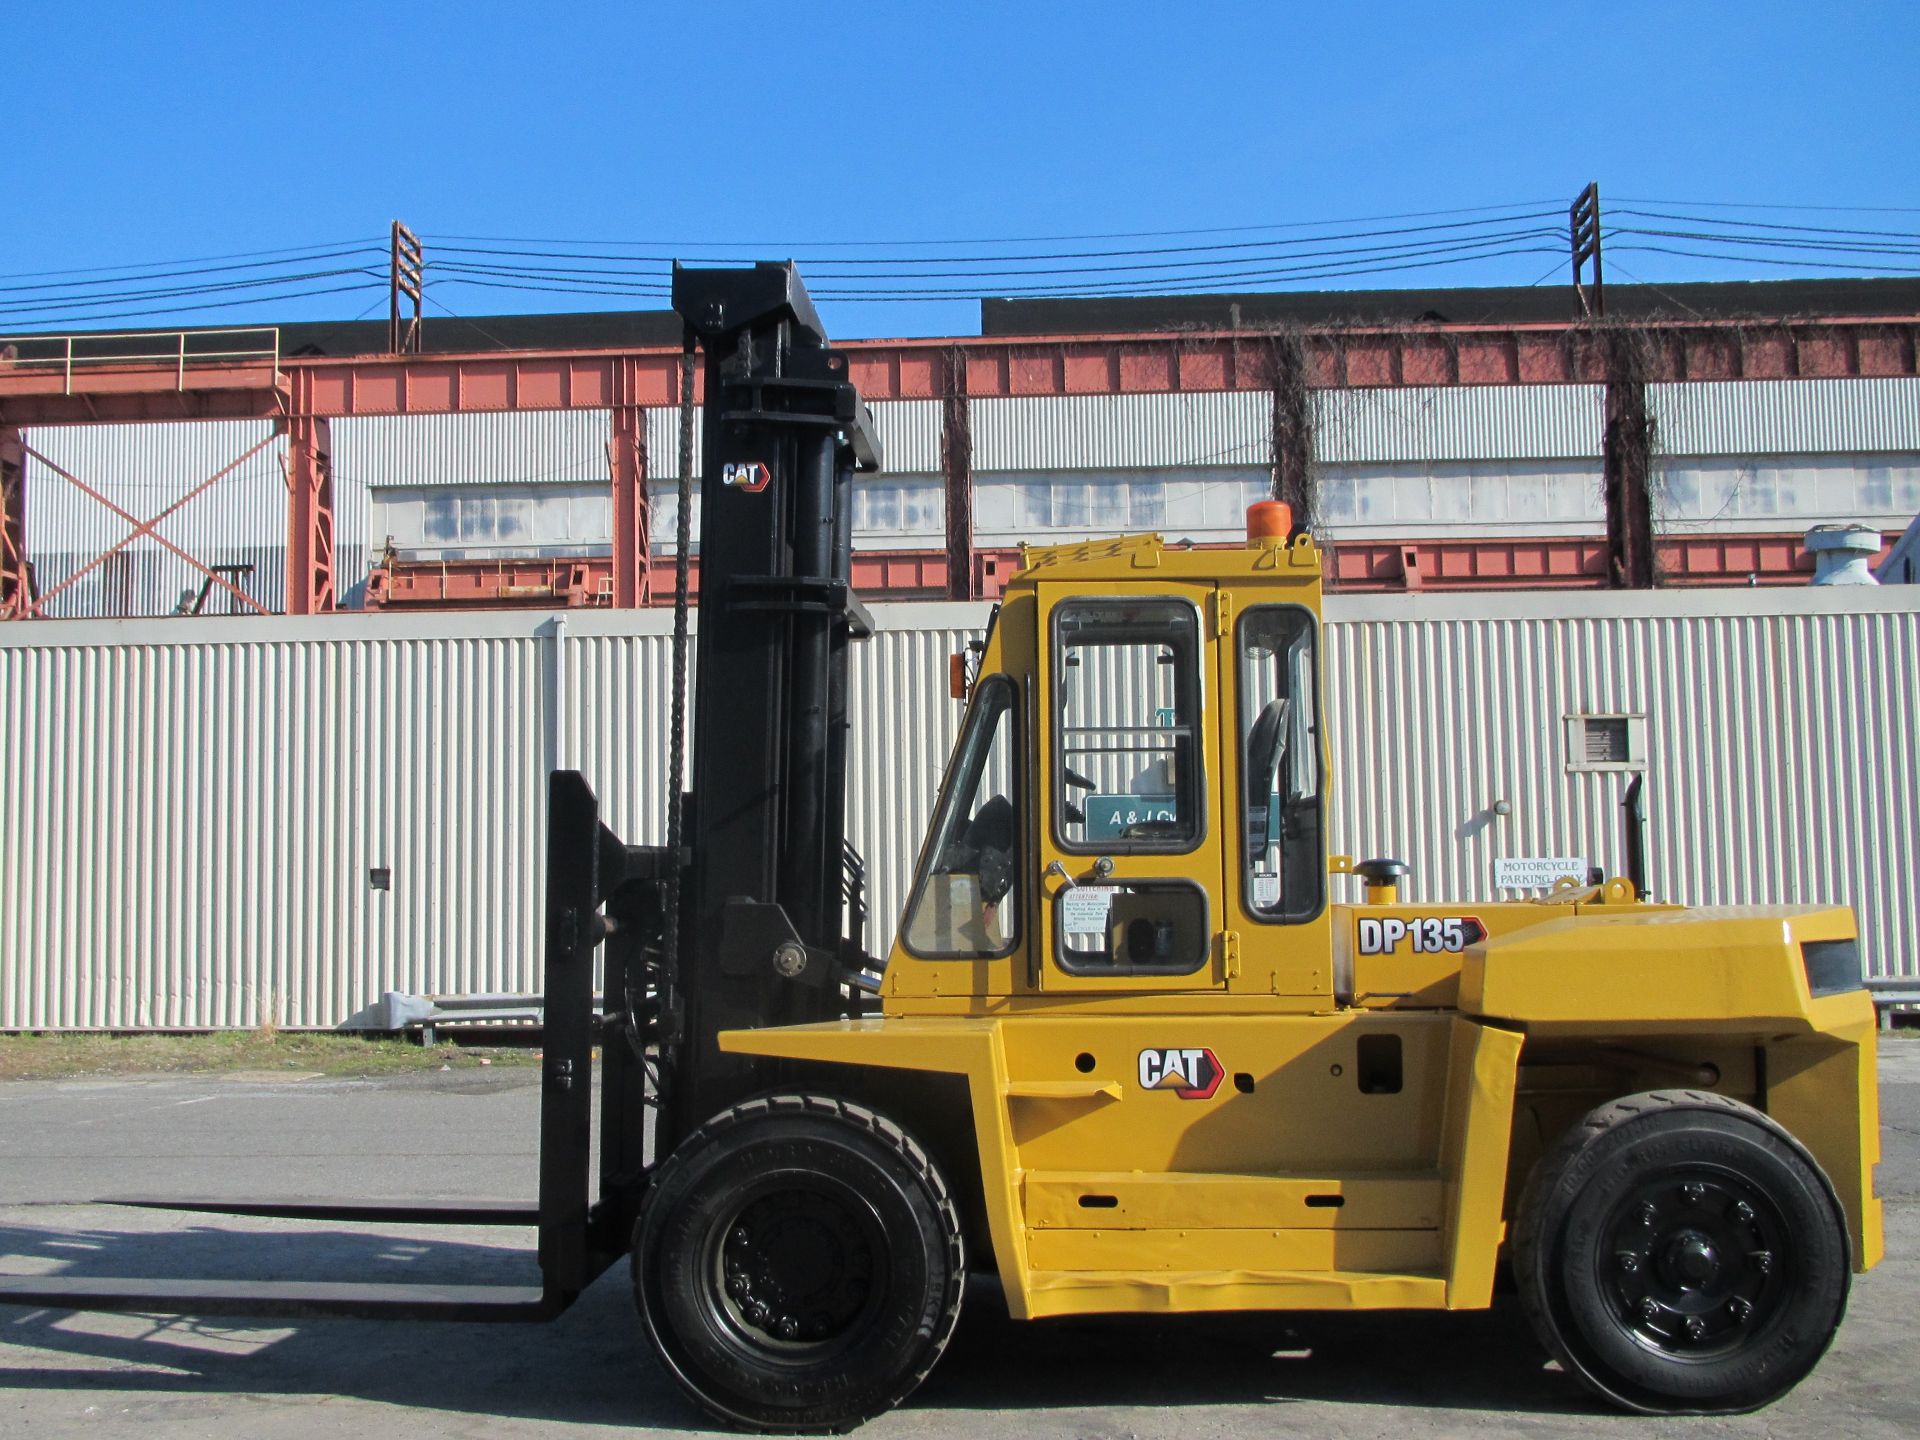 Caterpillar DP135 30,000 lb Forklift - Image 7 of 14